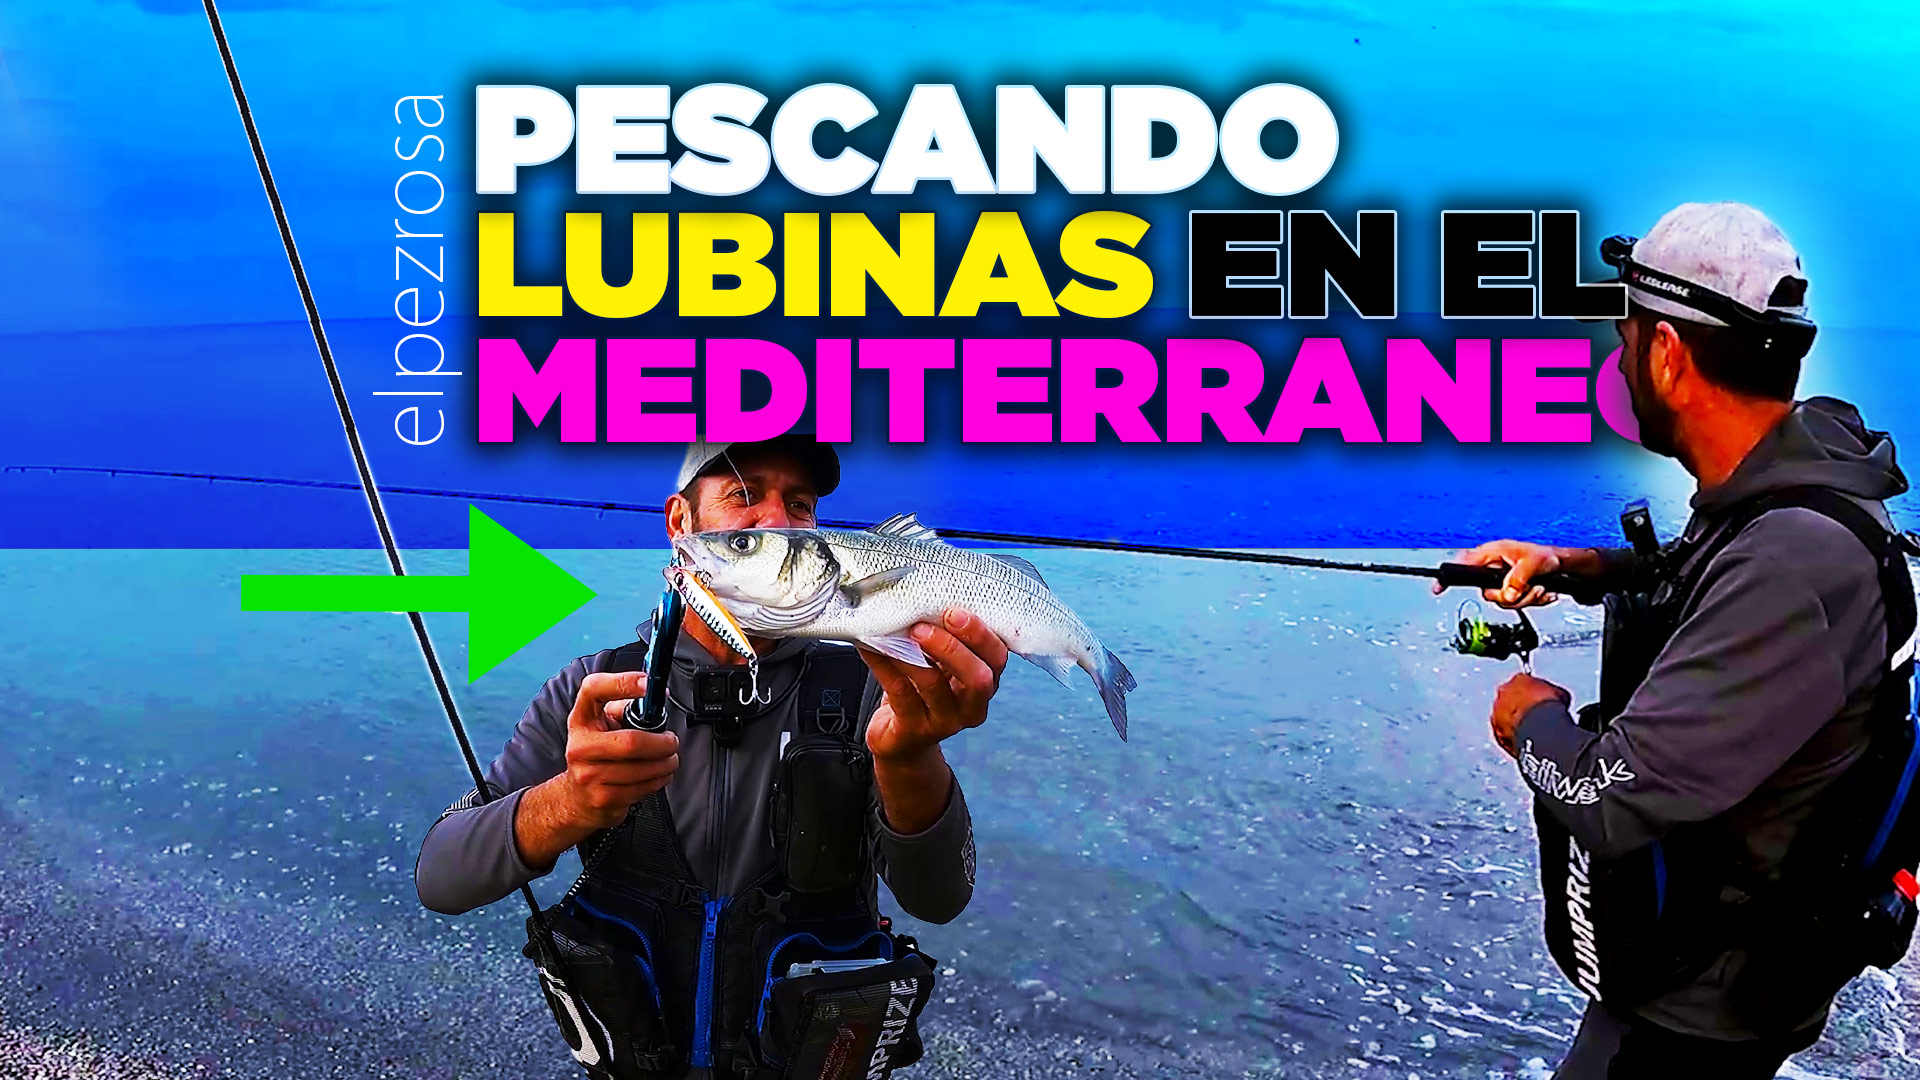 VIDEO - Pescando lubinas mediterraneas desde playa a spinning